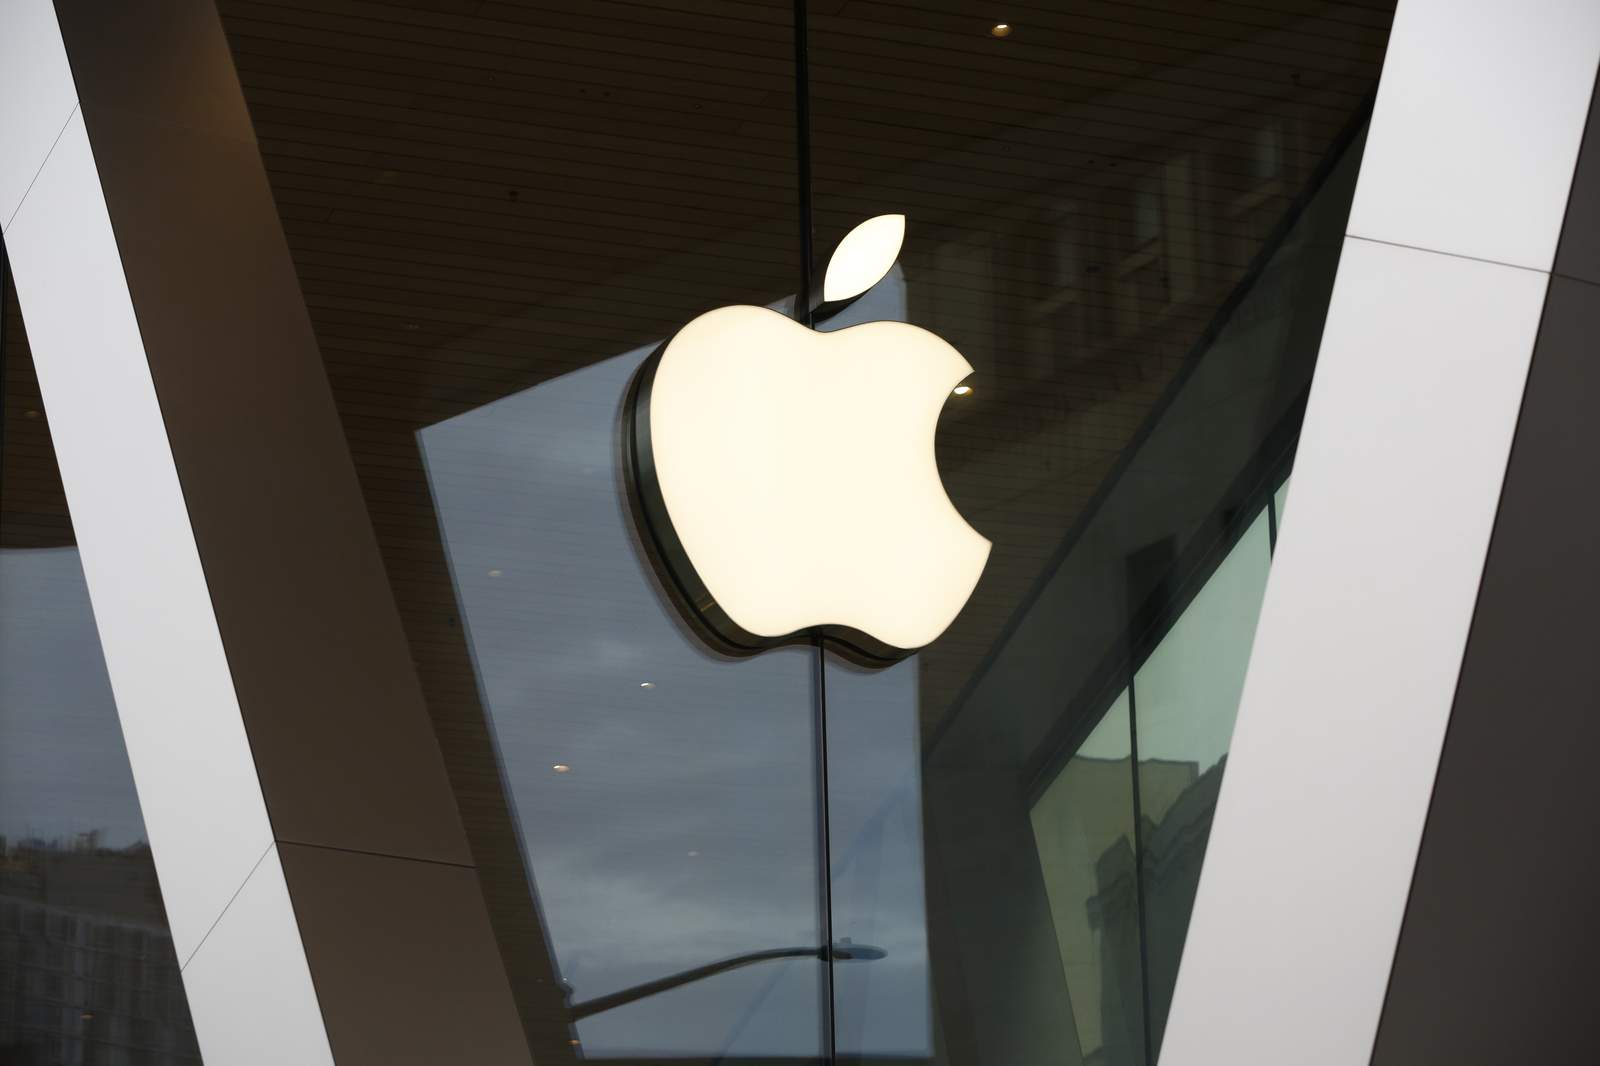 Apple closes Michigan stores amid COVID wave